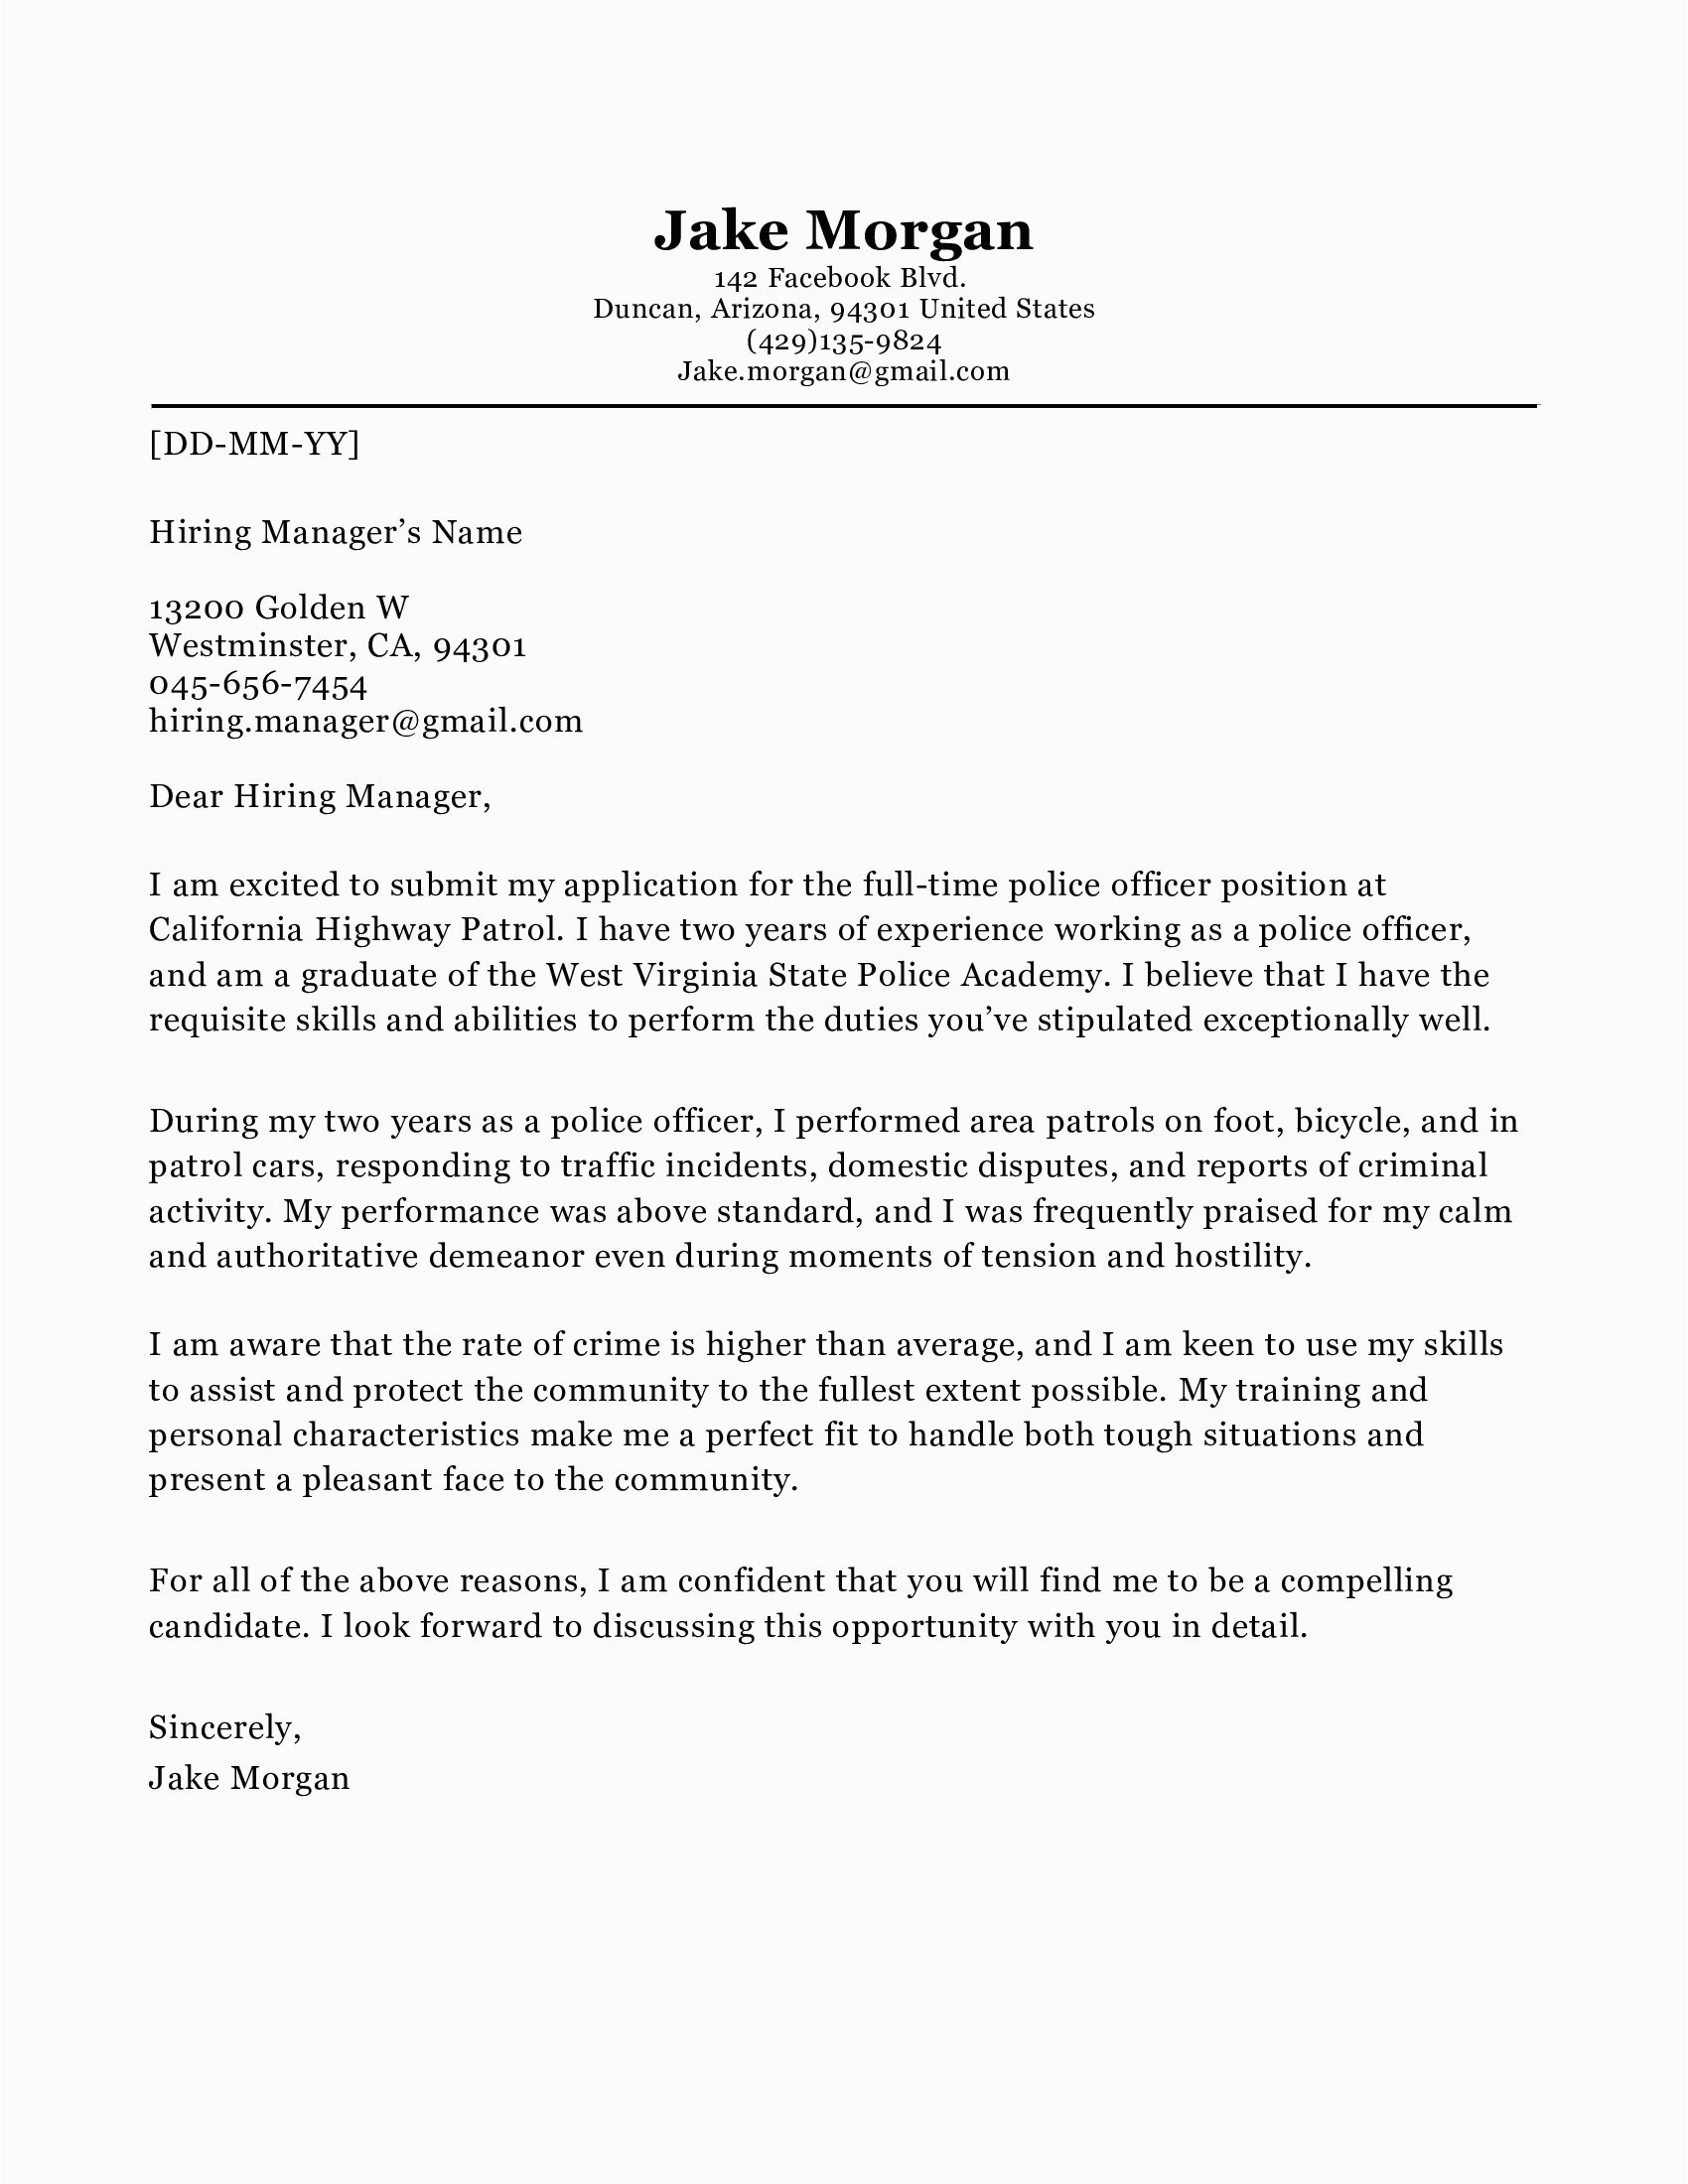 Police Officer Resume Cover Letter Samples 10 Cover Letter for Police Ficer